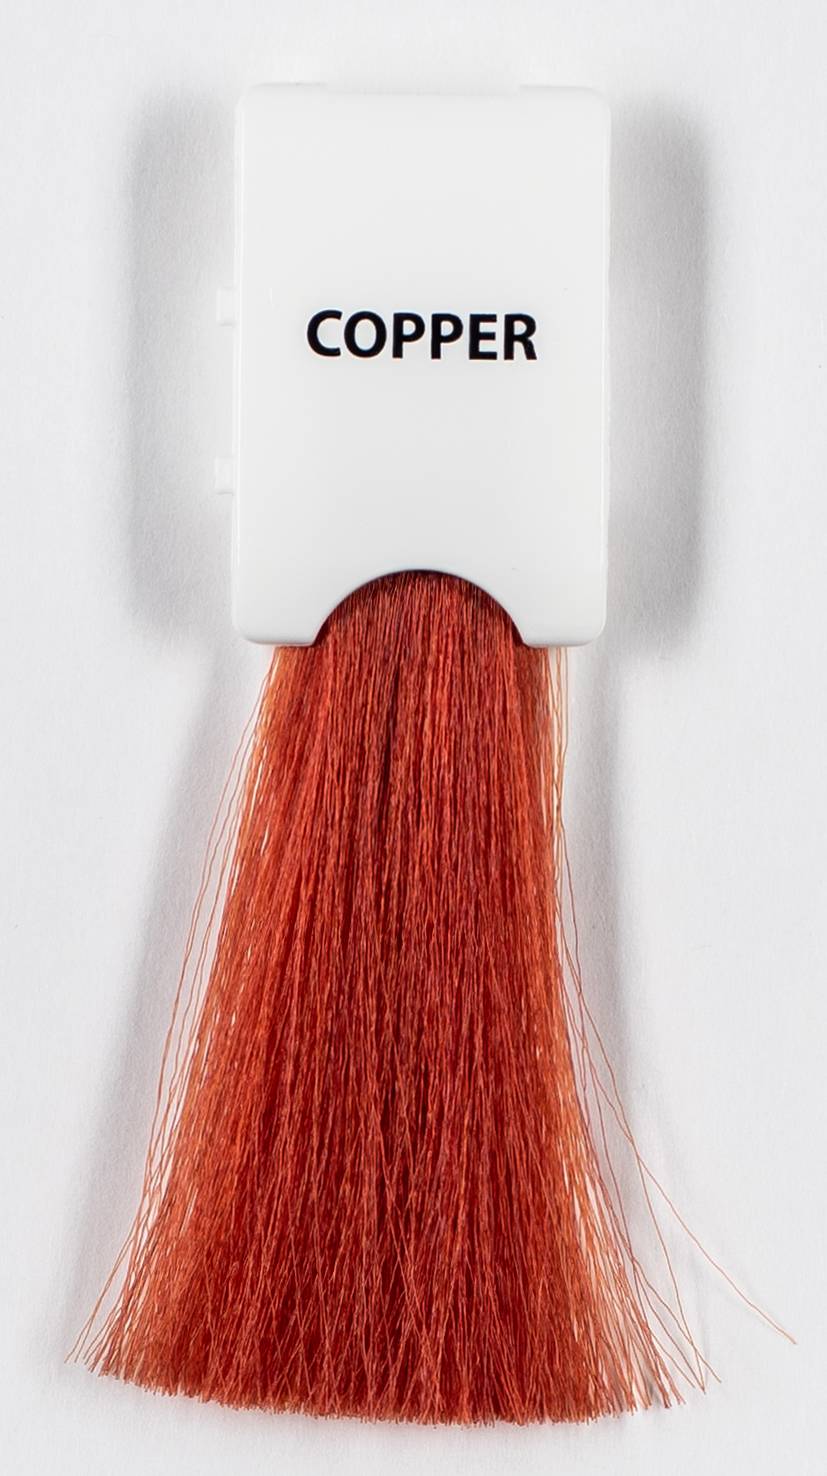 Copper медный контрастный